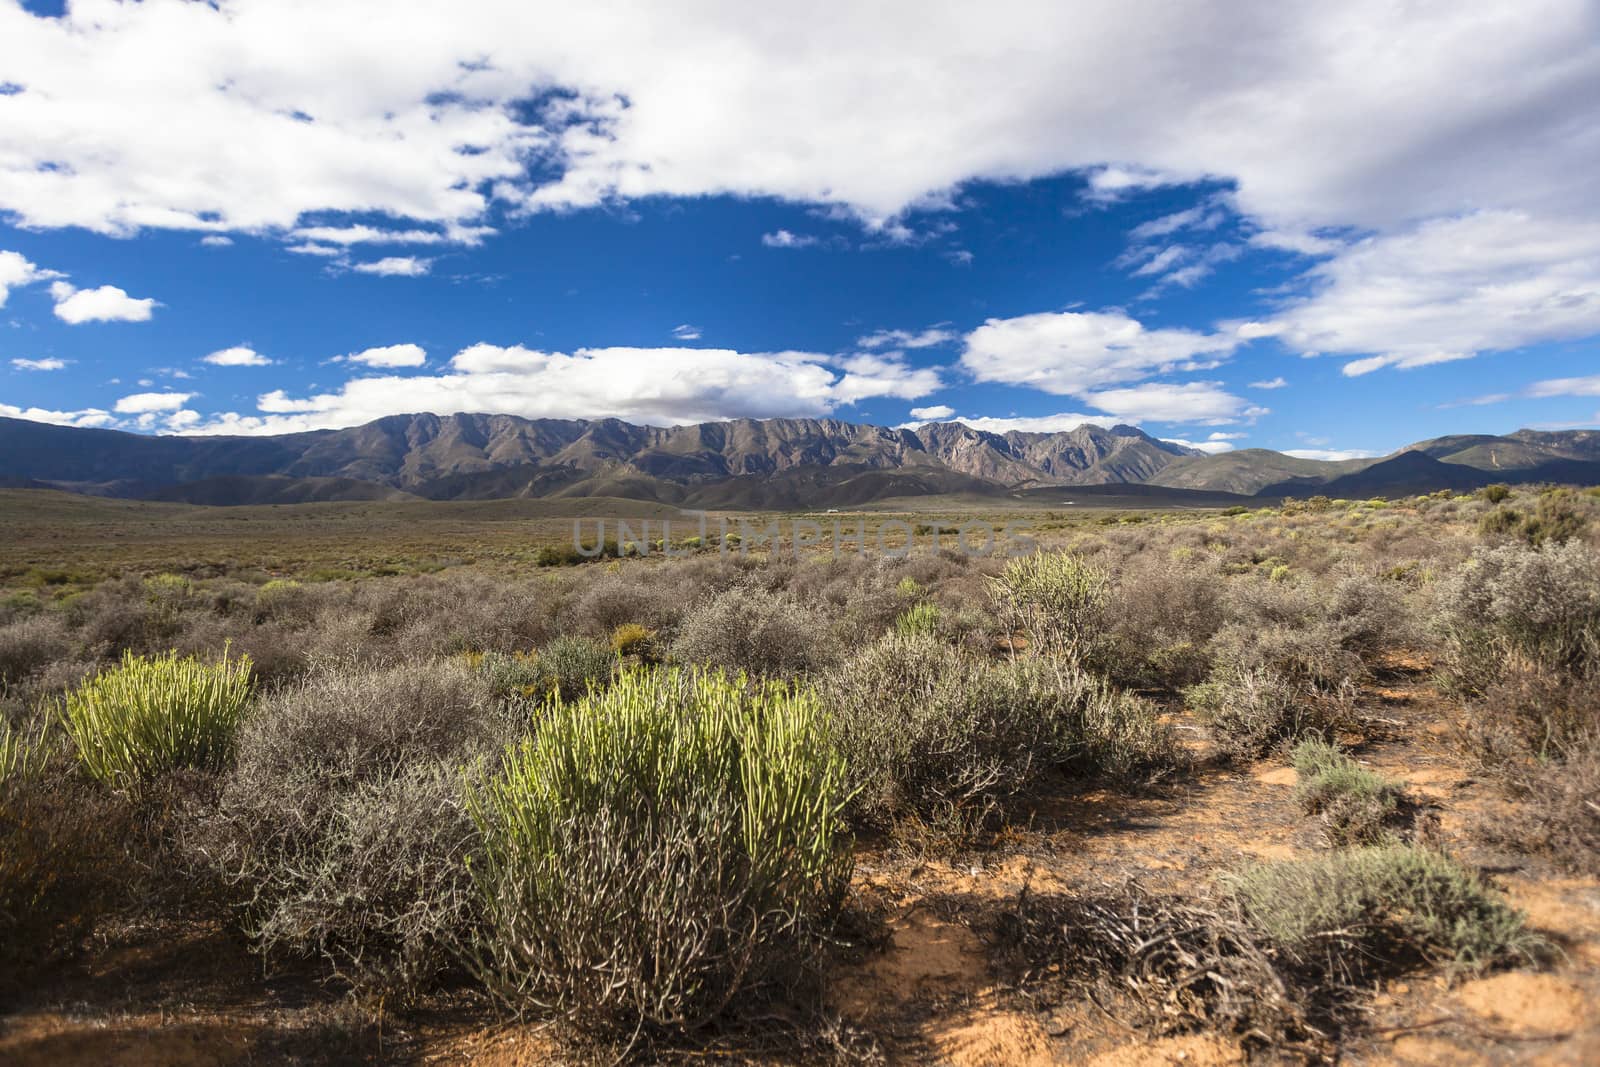 Dry arid terrain vegetation plants on landscape plateau and distant mountains